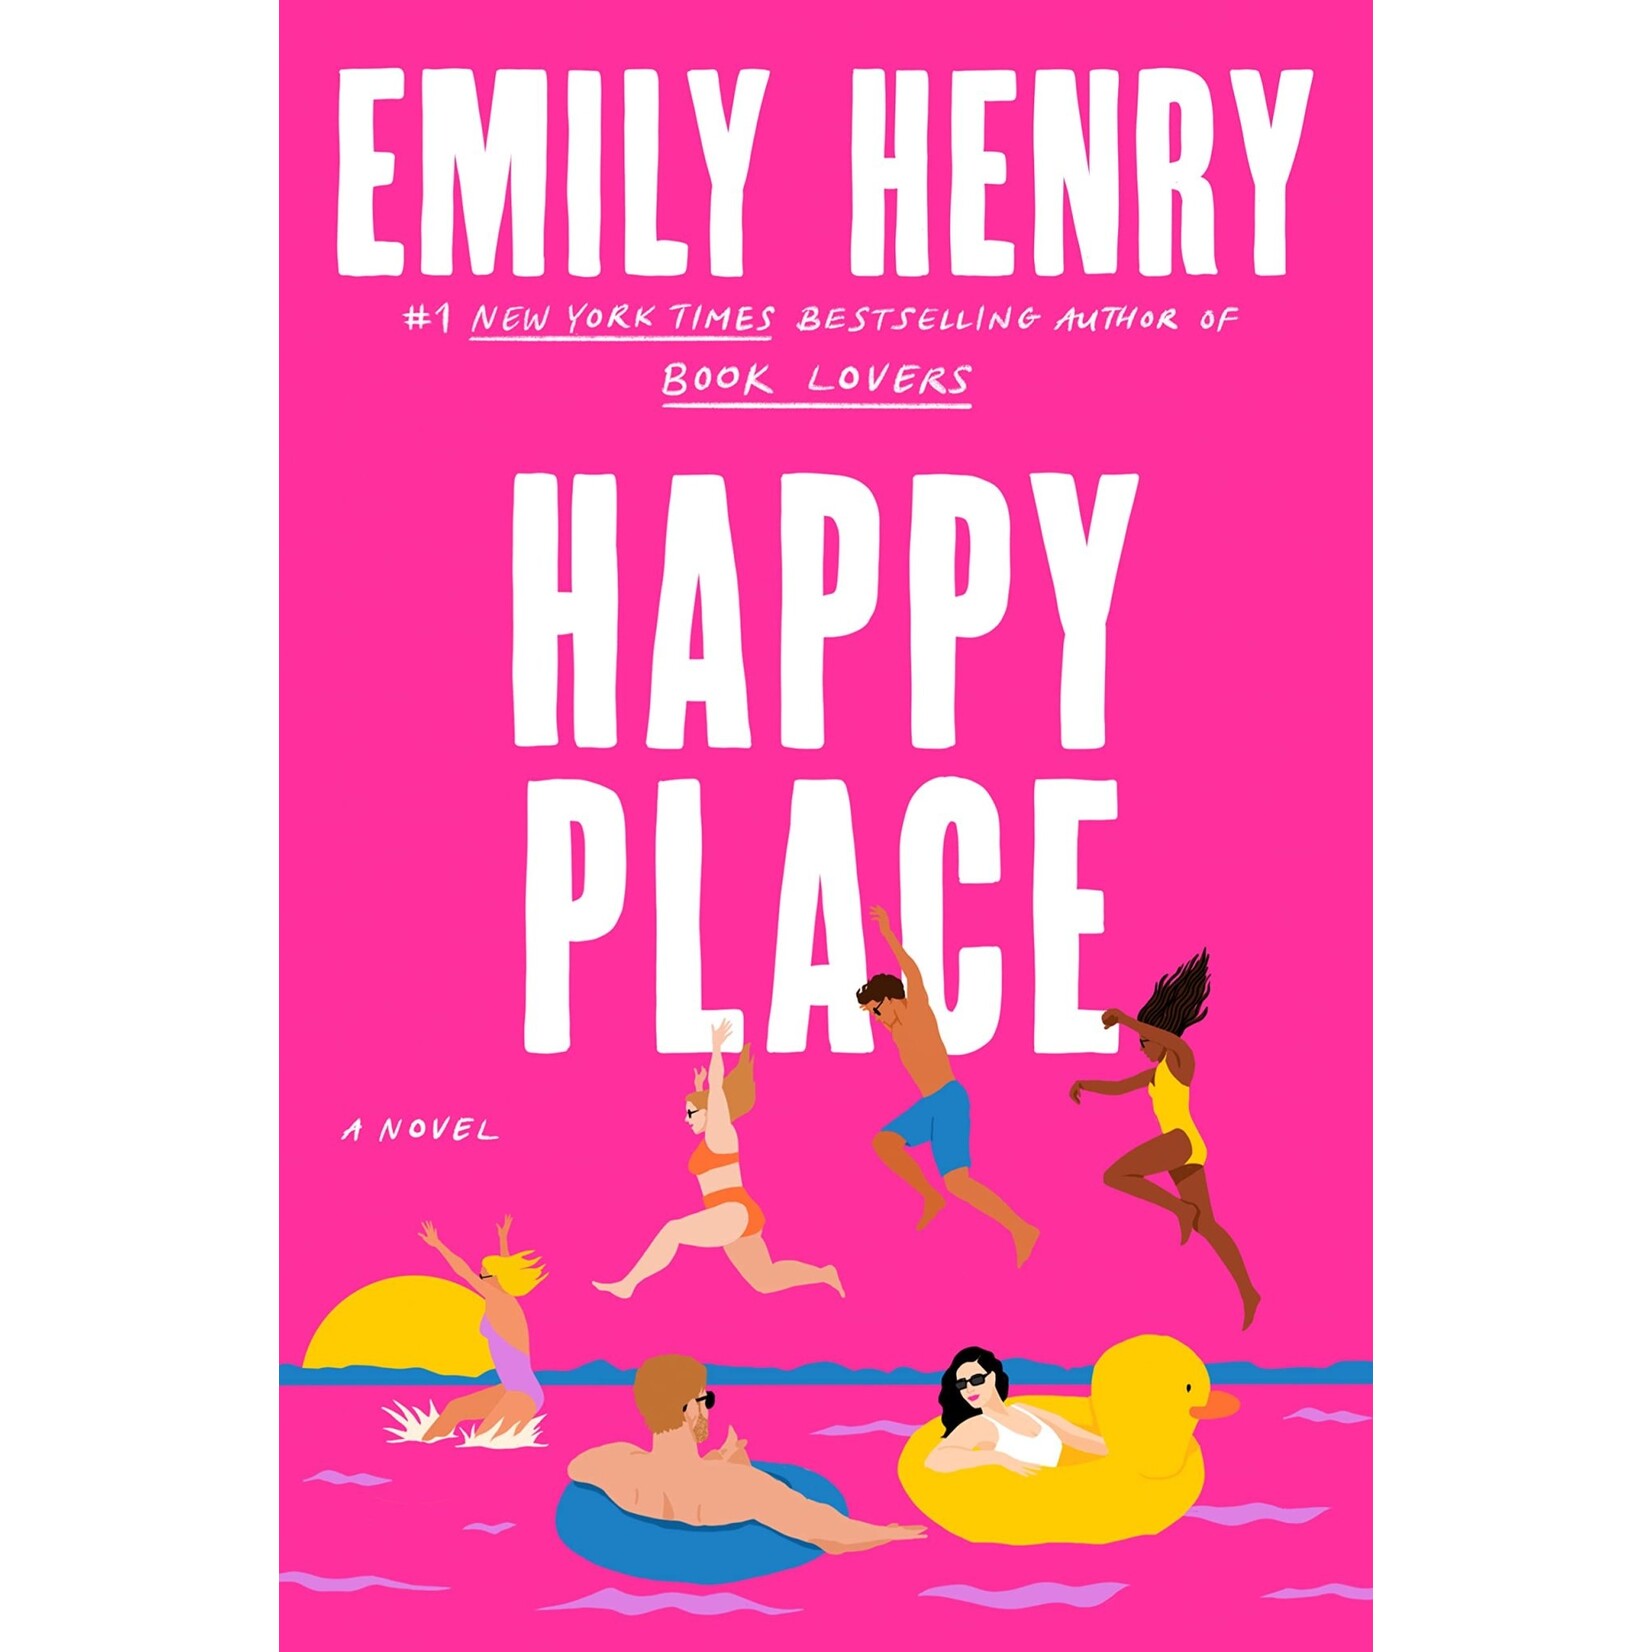 Happy Place: A Novel